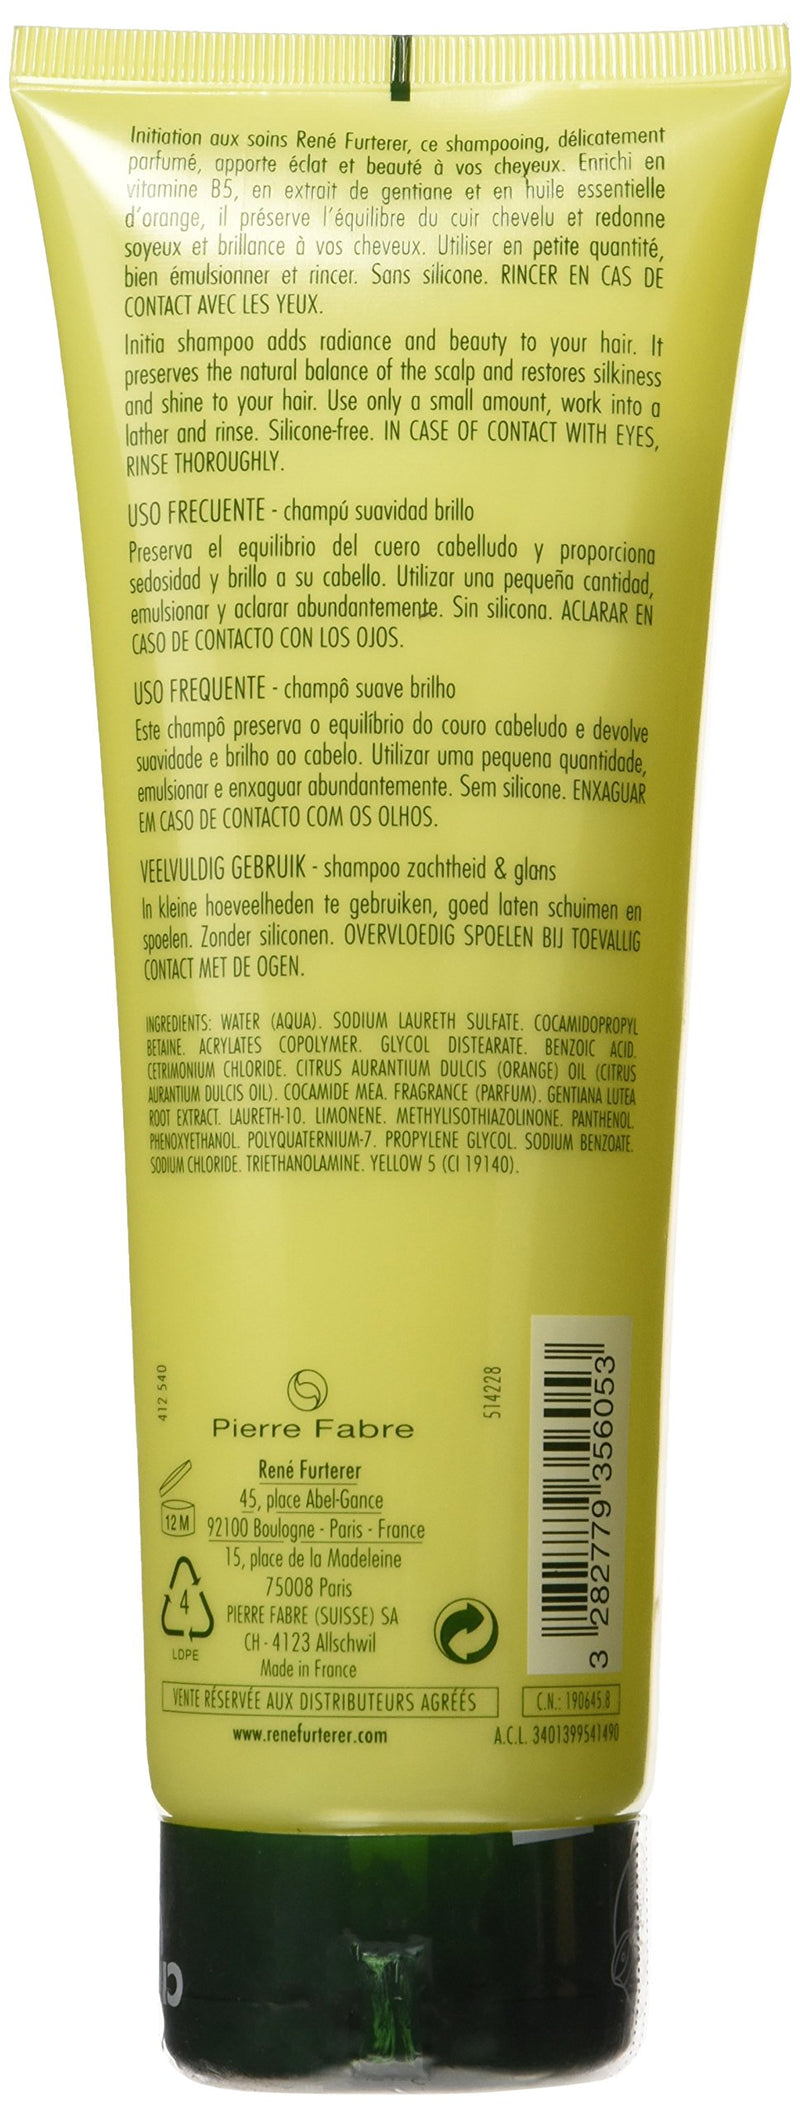 Rene Furterer Initia Gentle Gloss Shampoo, 8.4 Ounce